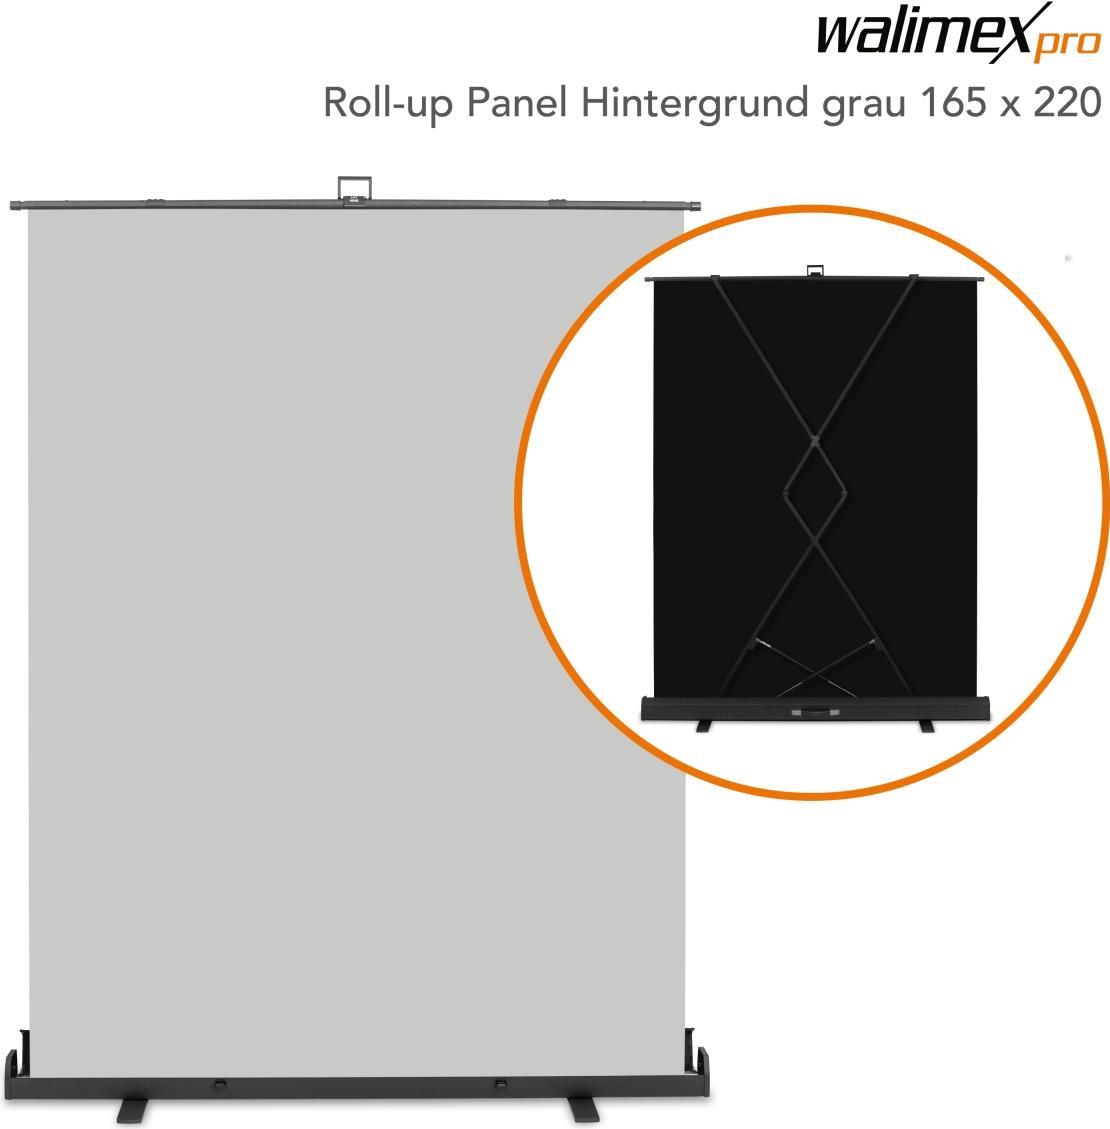 WALSER Walimex pro Roll-up Panel Hintergrund grau 165x220 (23207)